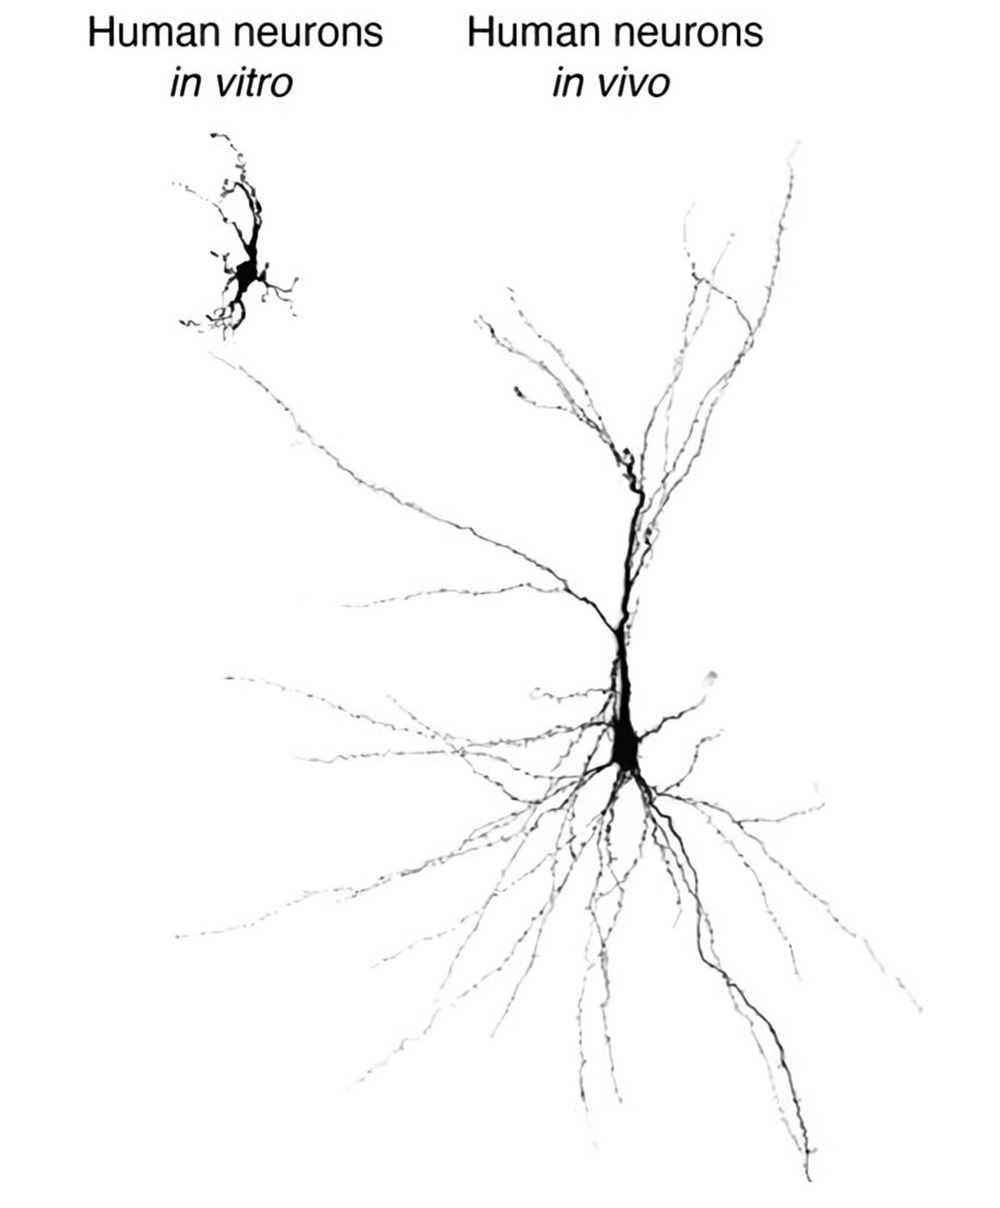 organoïdes neuronaux rat - Humain 1 22